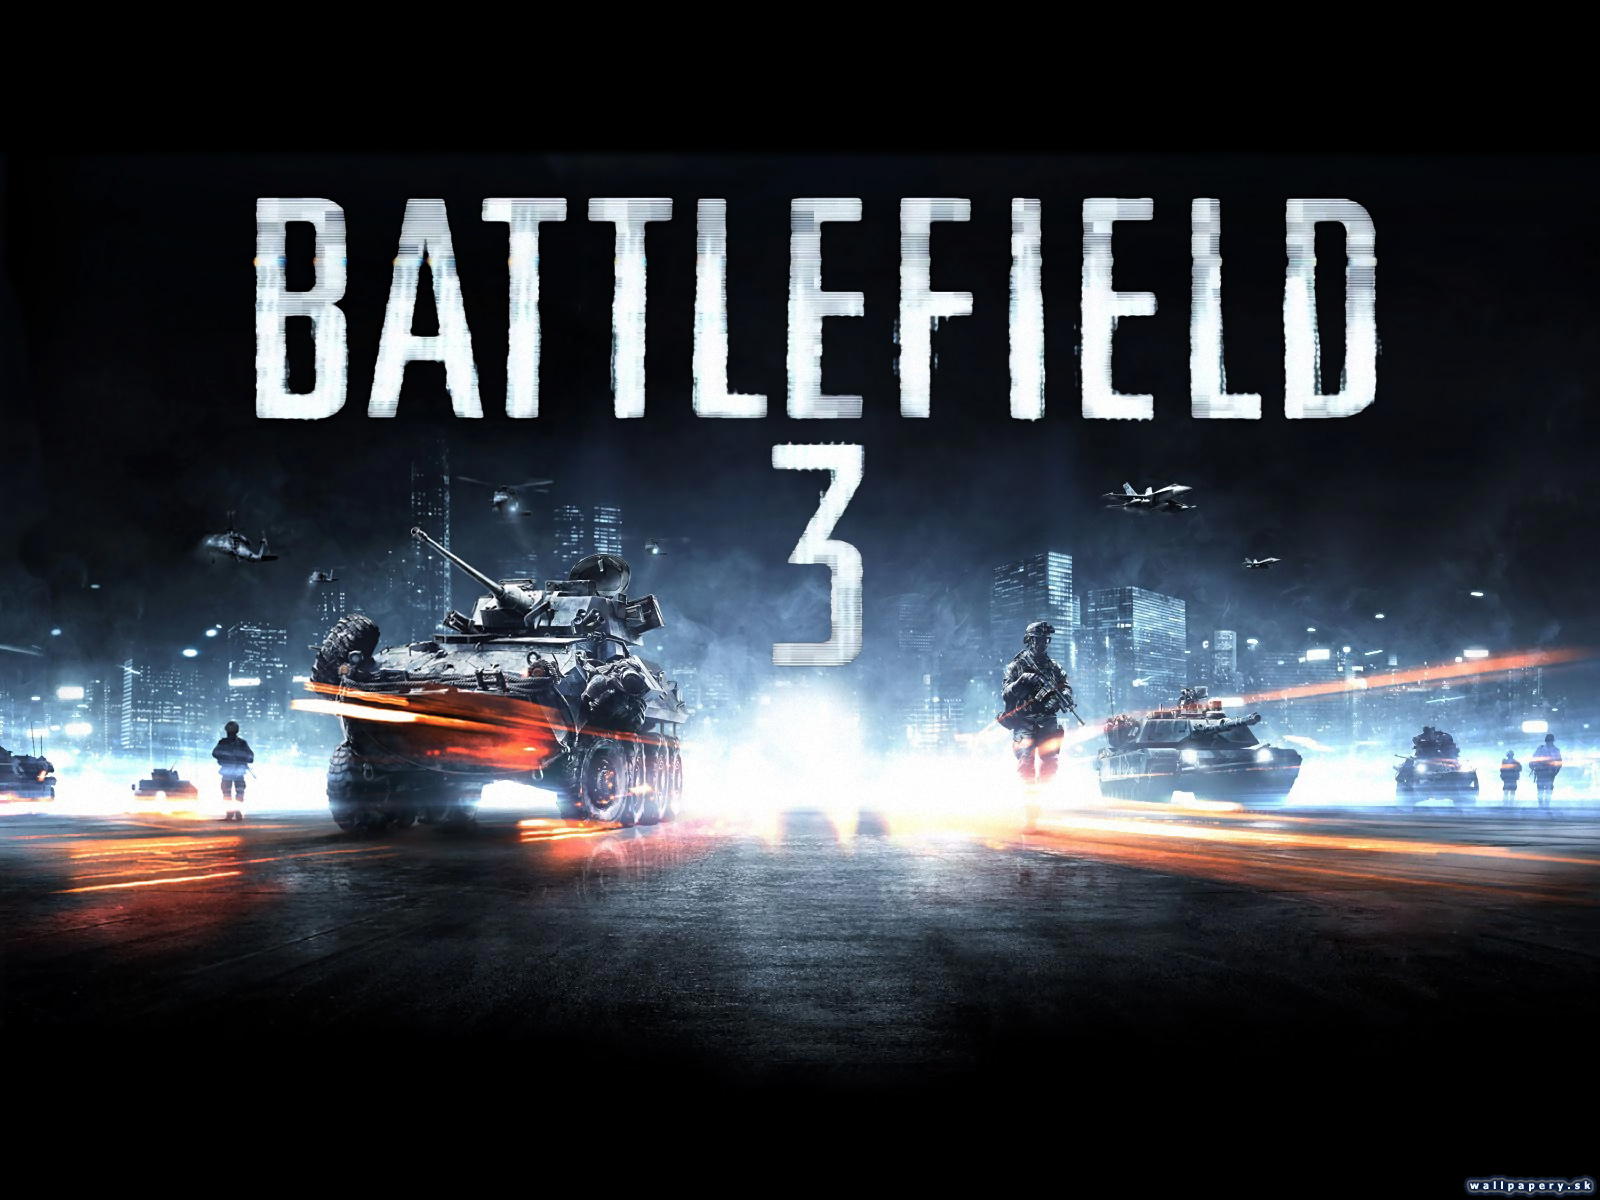 Battlefield 3 - wallpaper 5